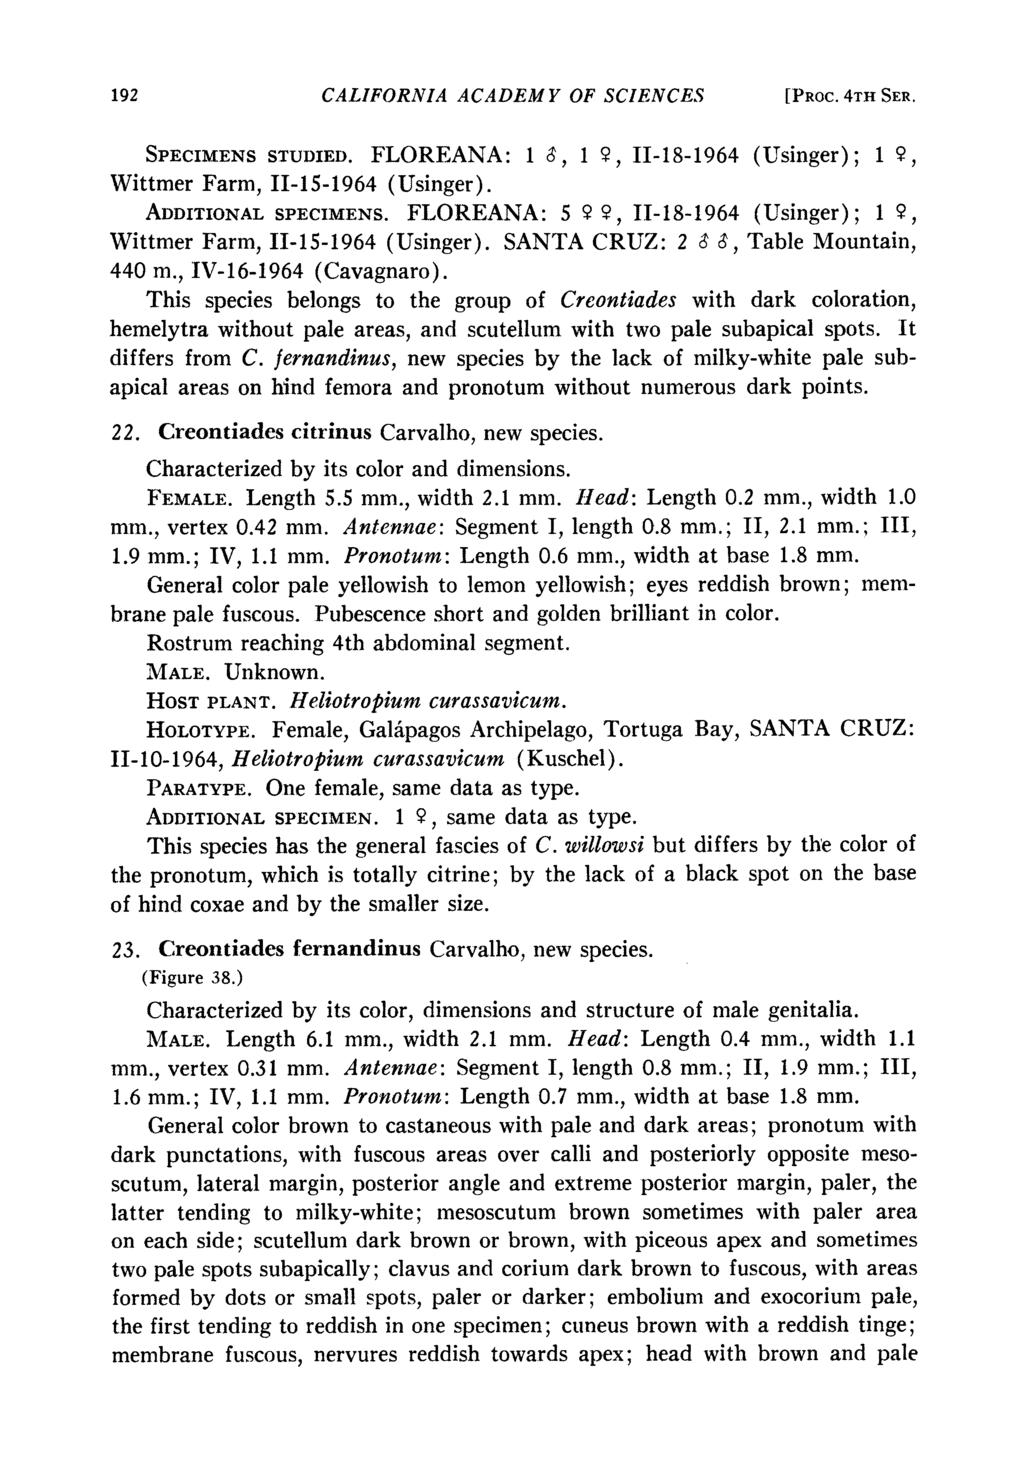 192 CALIFORNIA ACADEMY OF SCIENCES [PROC. 4TH SER. SPECIMENS STUDIED. FLOREANA: 1 8, 1 9, 11-18-1964 (Usinger); 1 9, Wittmer Farm, II-15-1964 (Usinger). ADDITIONAL SPECIMENS.